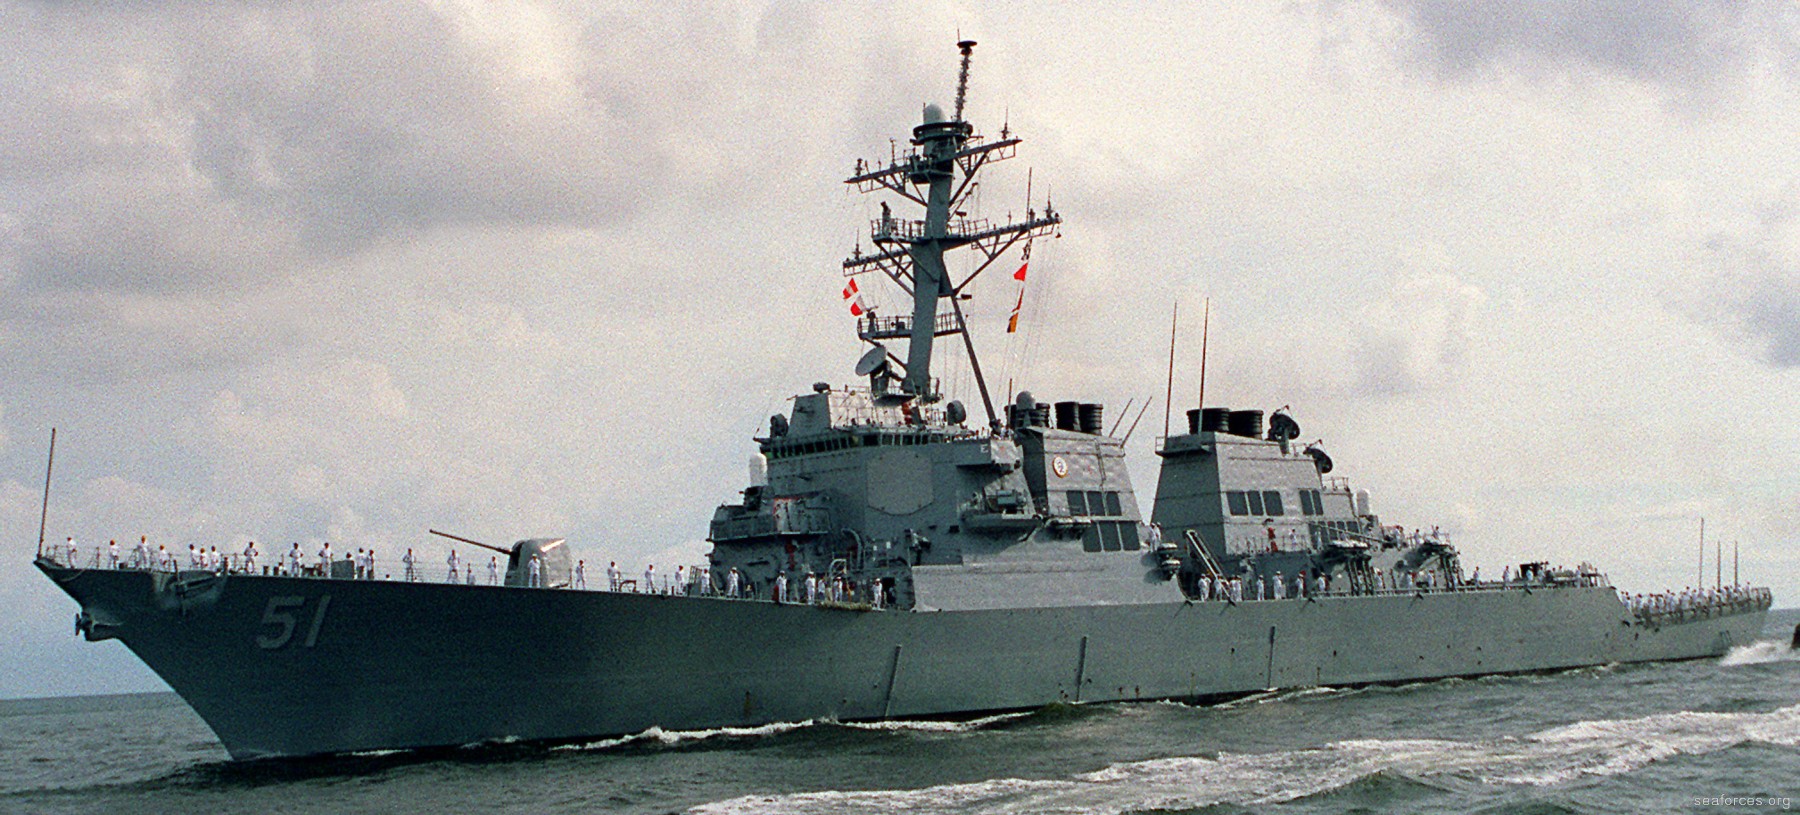 ddg-51 uss arleigh burke destroyer us navy 69